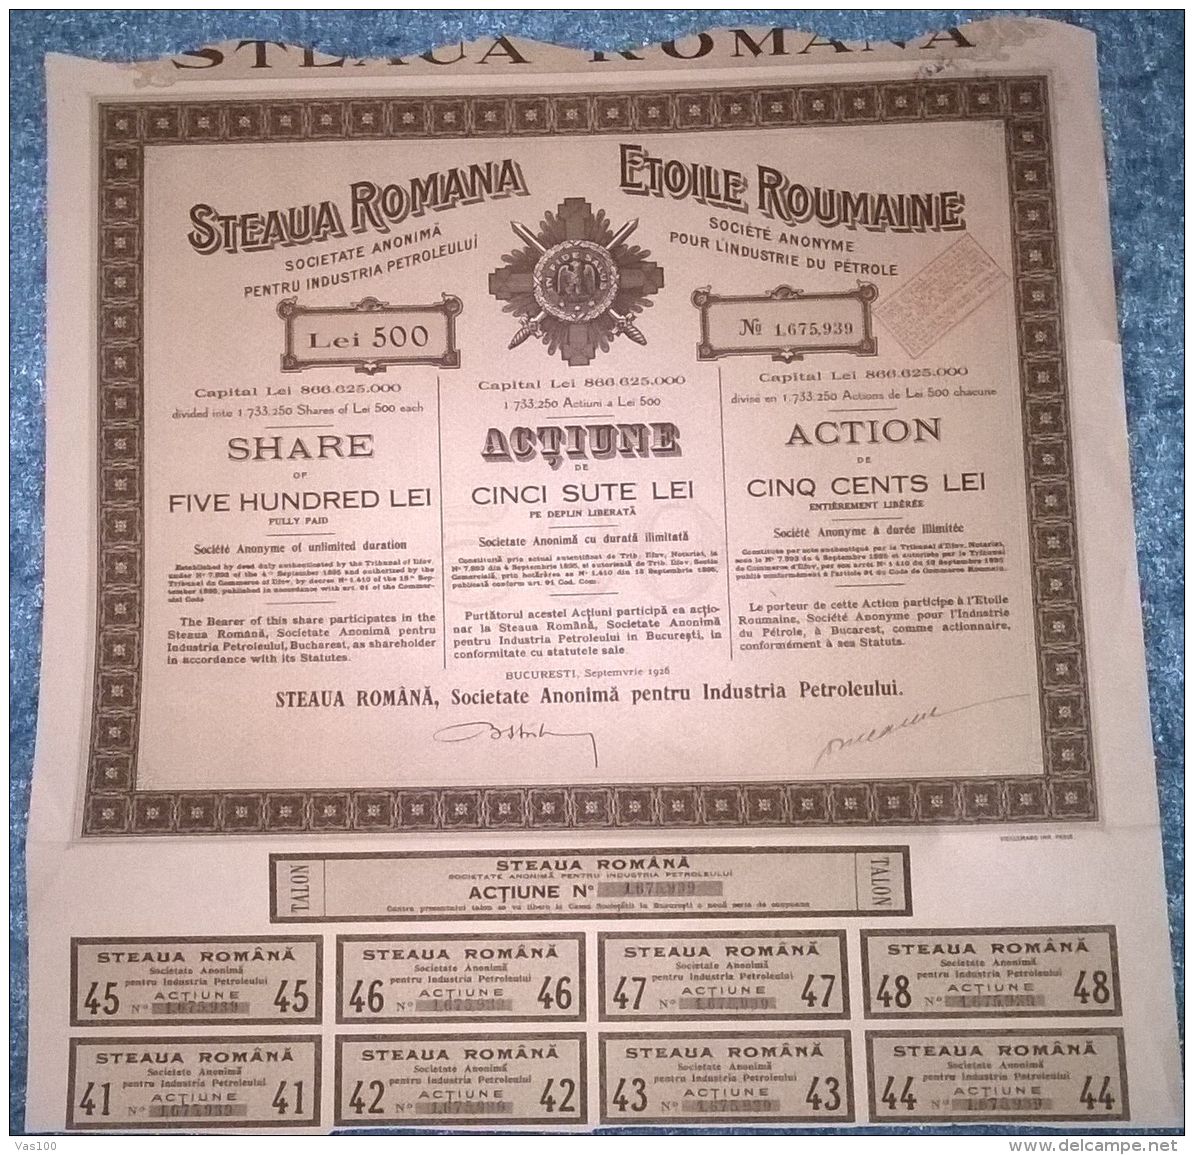 STEAUA ROMANA OIL COMPANY, SHARES, STOCK, REVENUE COUPONS, 1926, ROMANIA - Pétrole